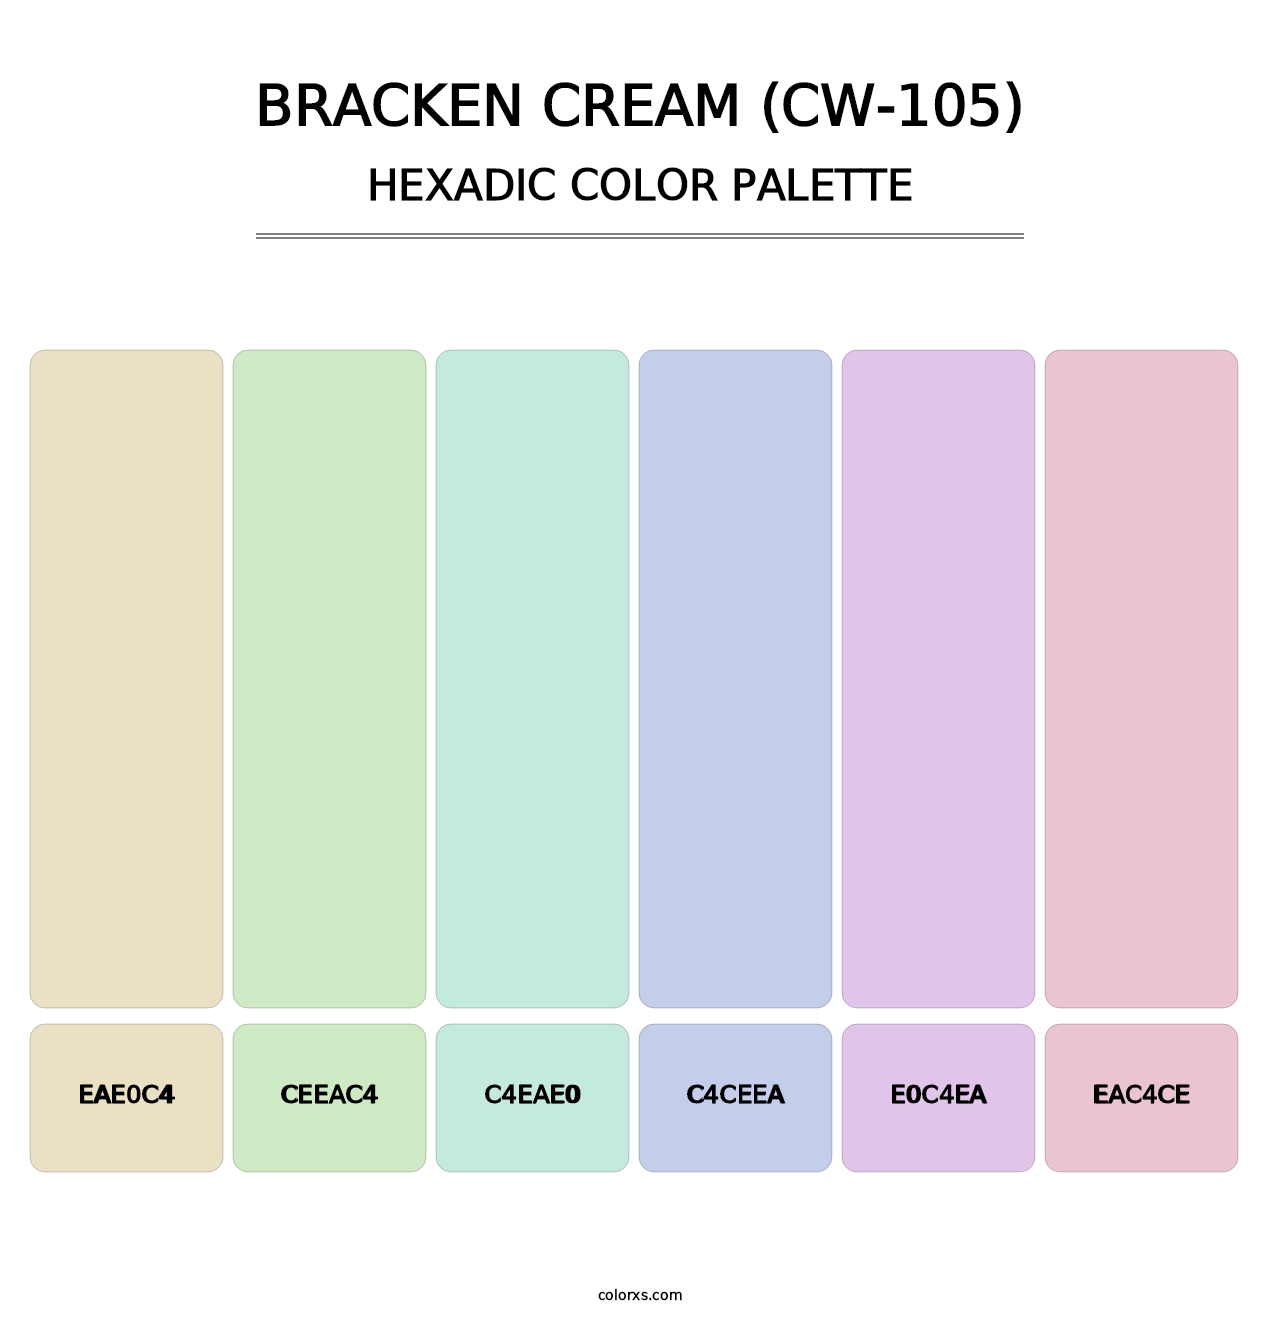 Bracken Cream (CW-105) - Hexadic Color Palette